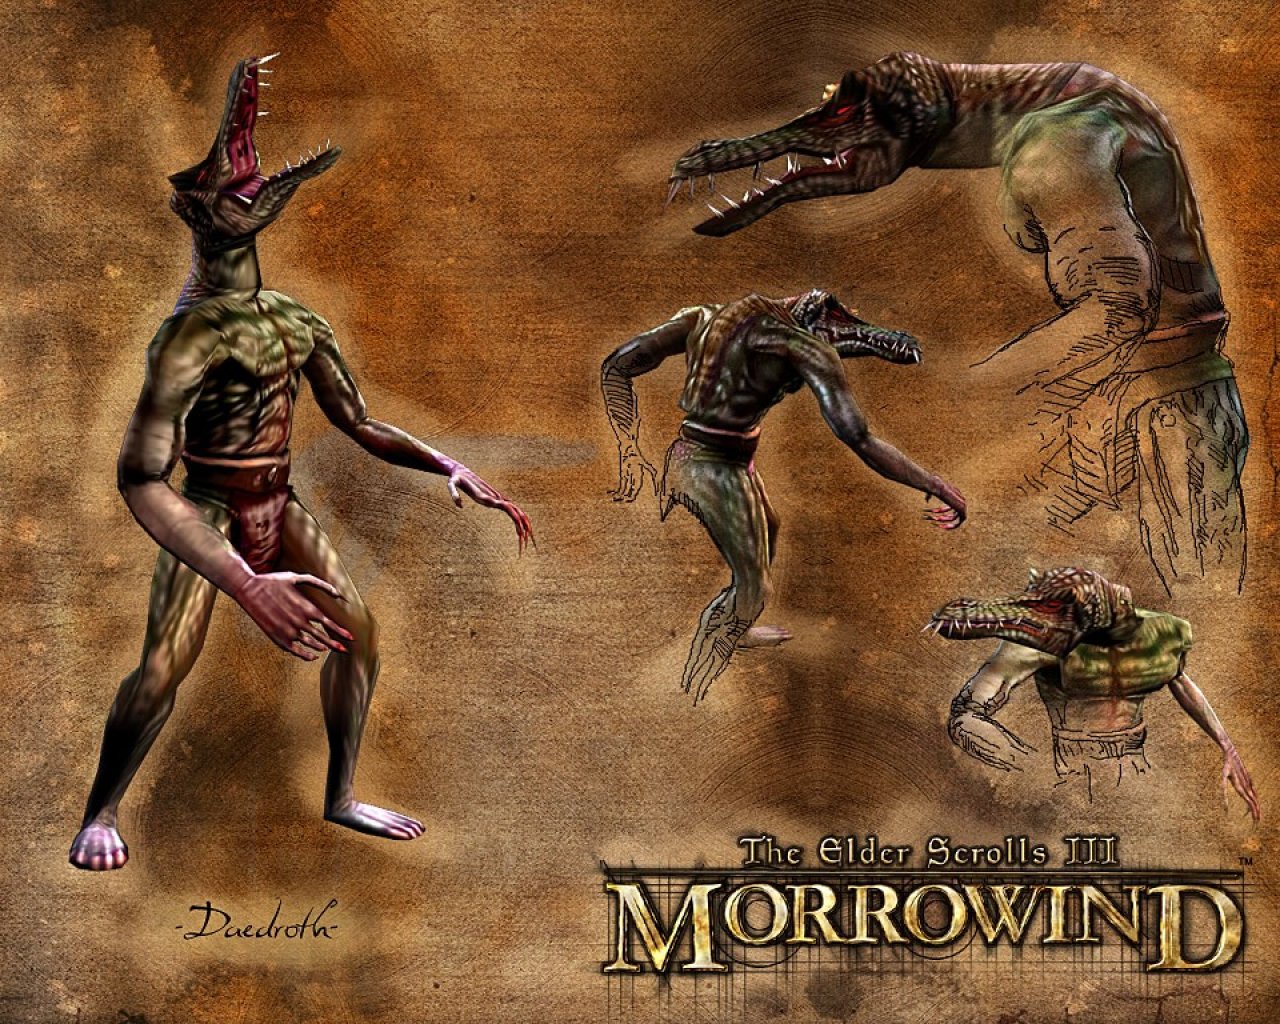 Wallpaper The Elder Scrolls III: Morrowind "Daedroth"